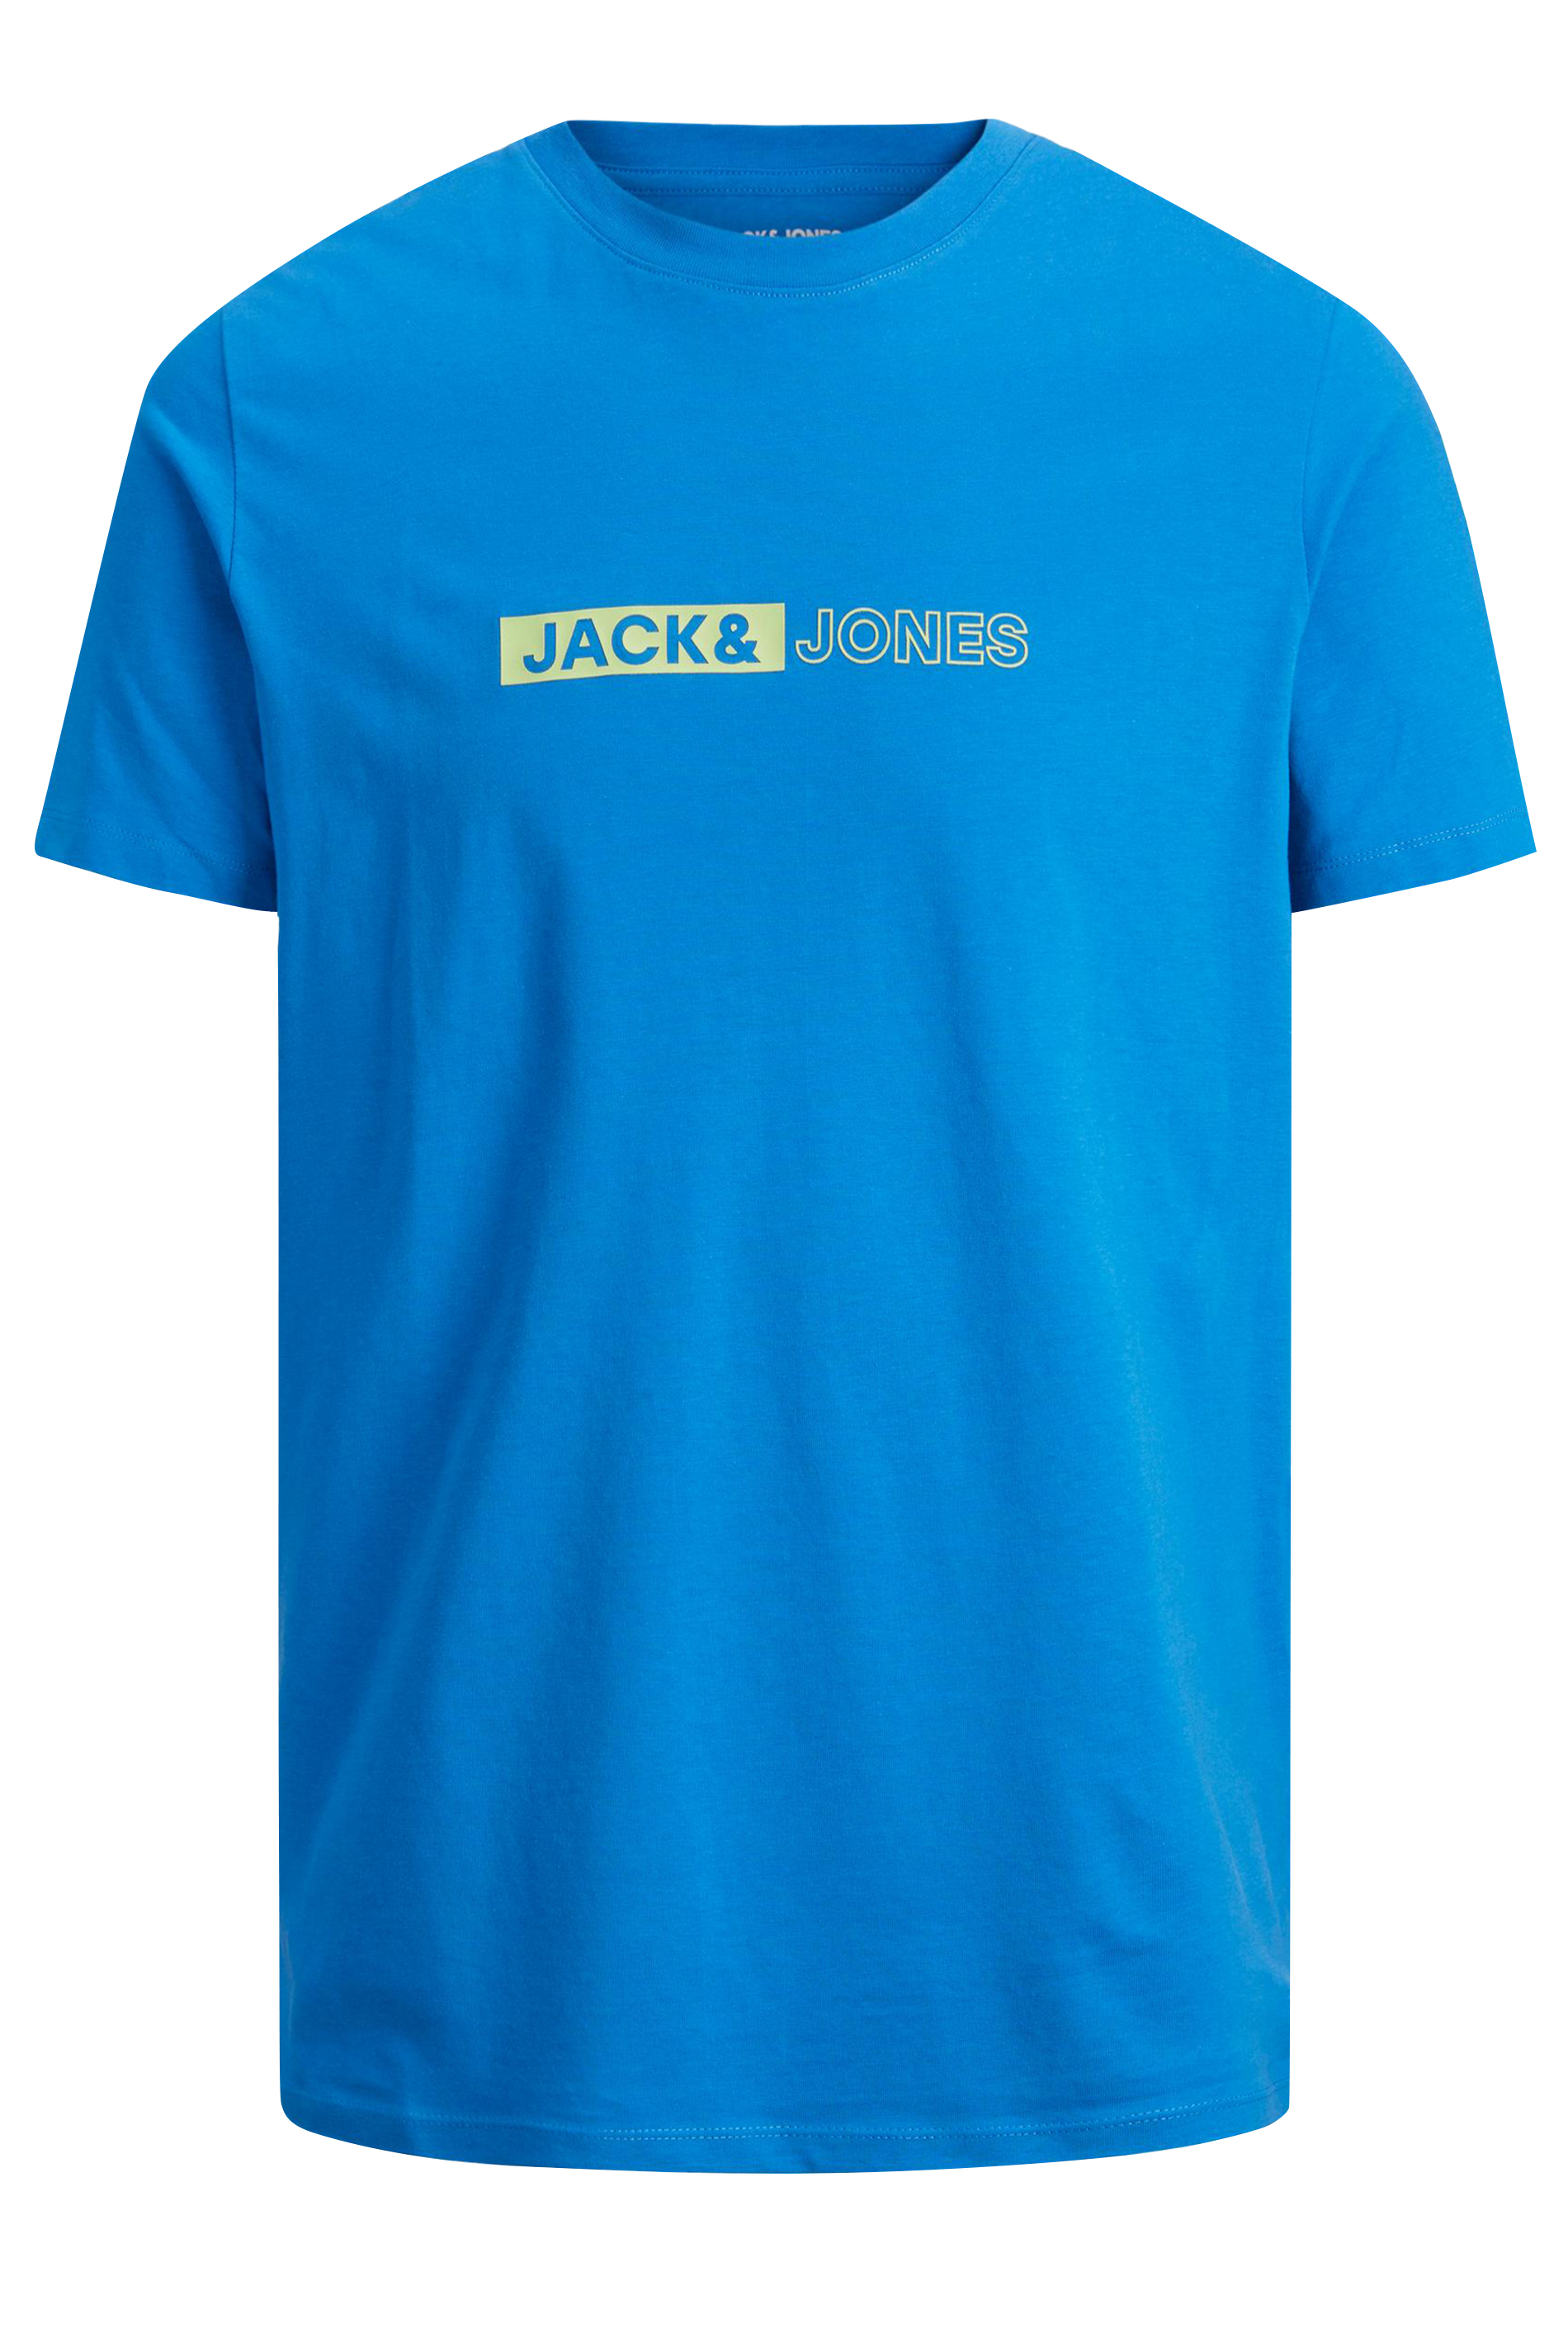 JACK & JONES Big & Tall Bright Blue Logo T-Shirt | BadRhino  2